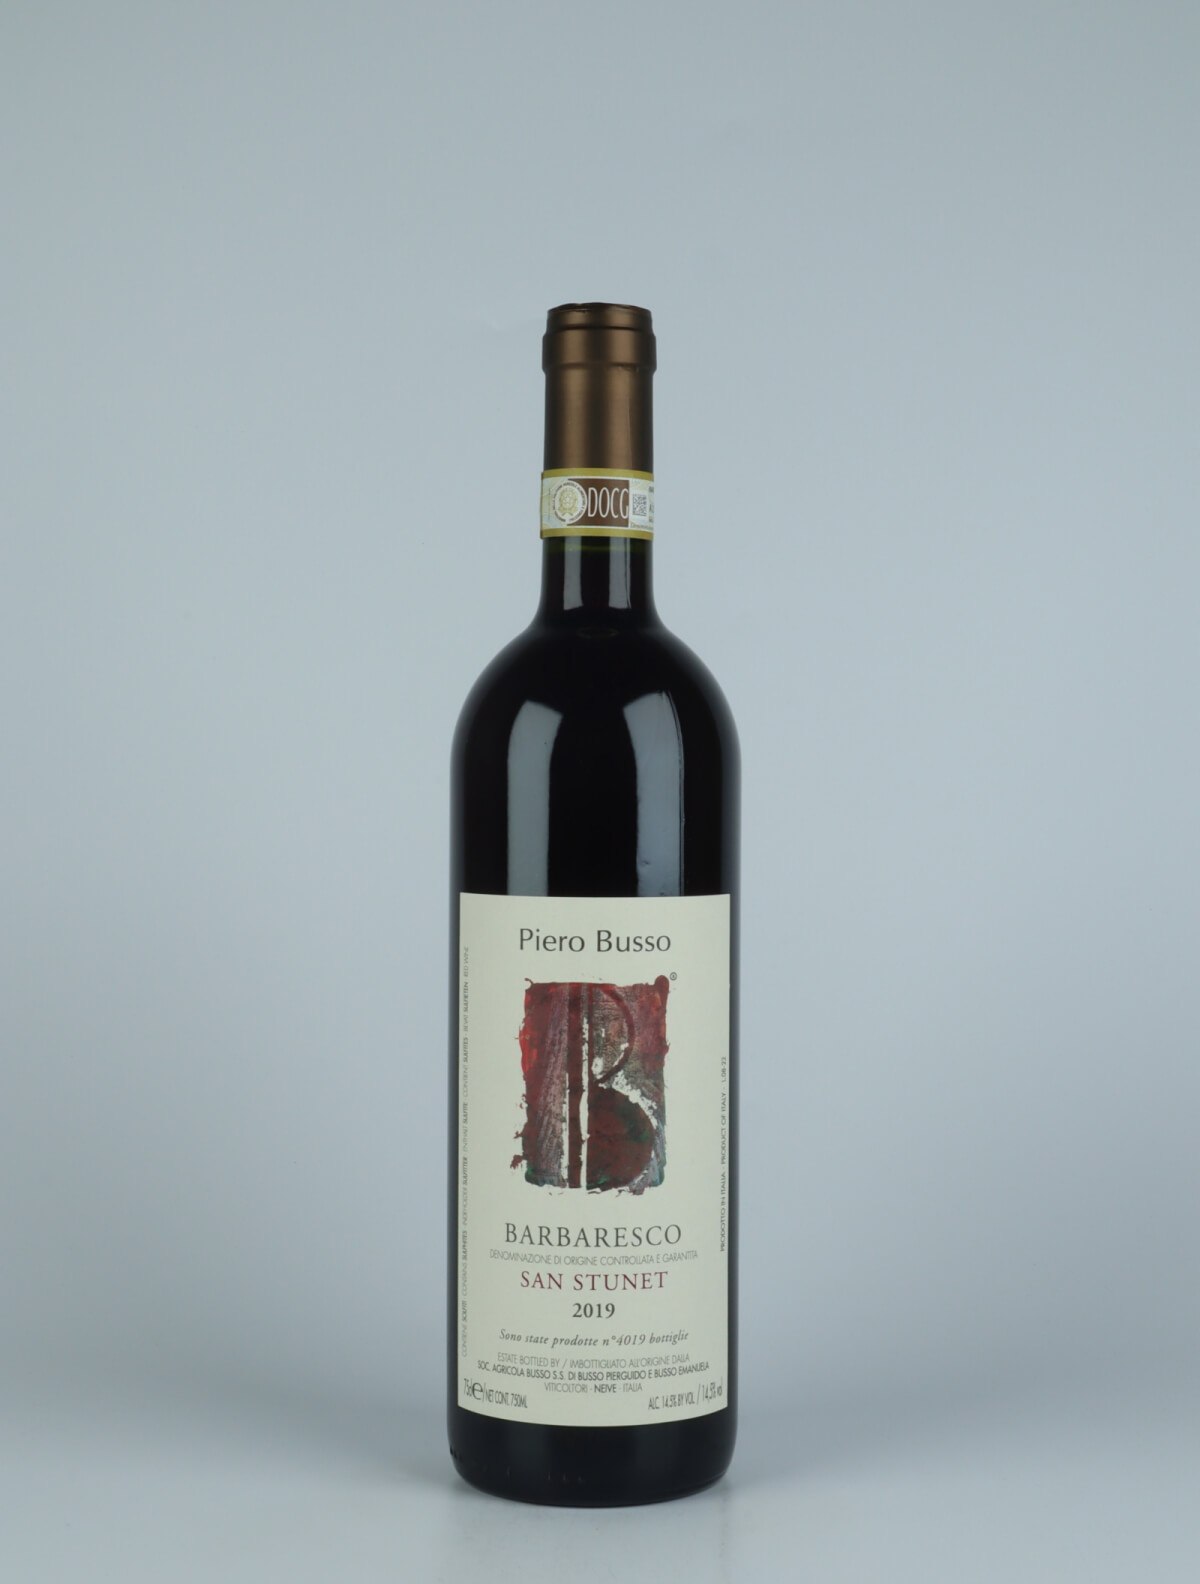 A bottle 2019 Barbaresco San Stunet Red wine from Piero Busso, Piedmont in Italy